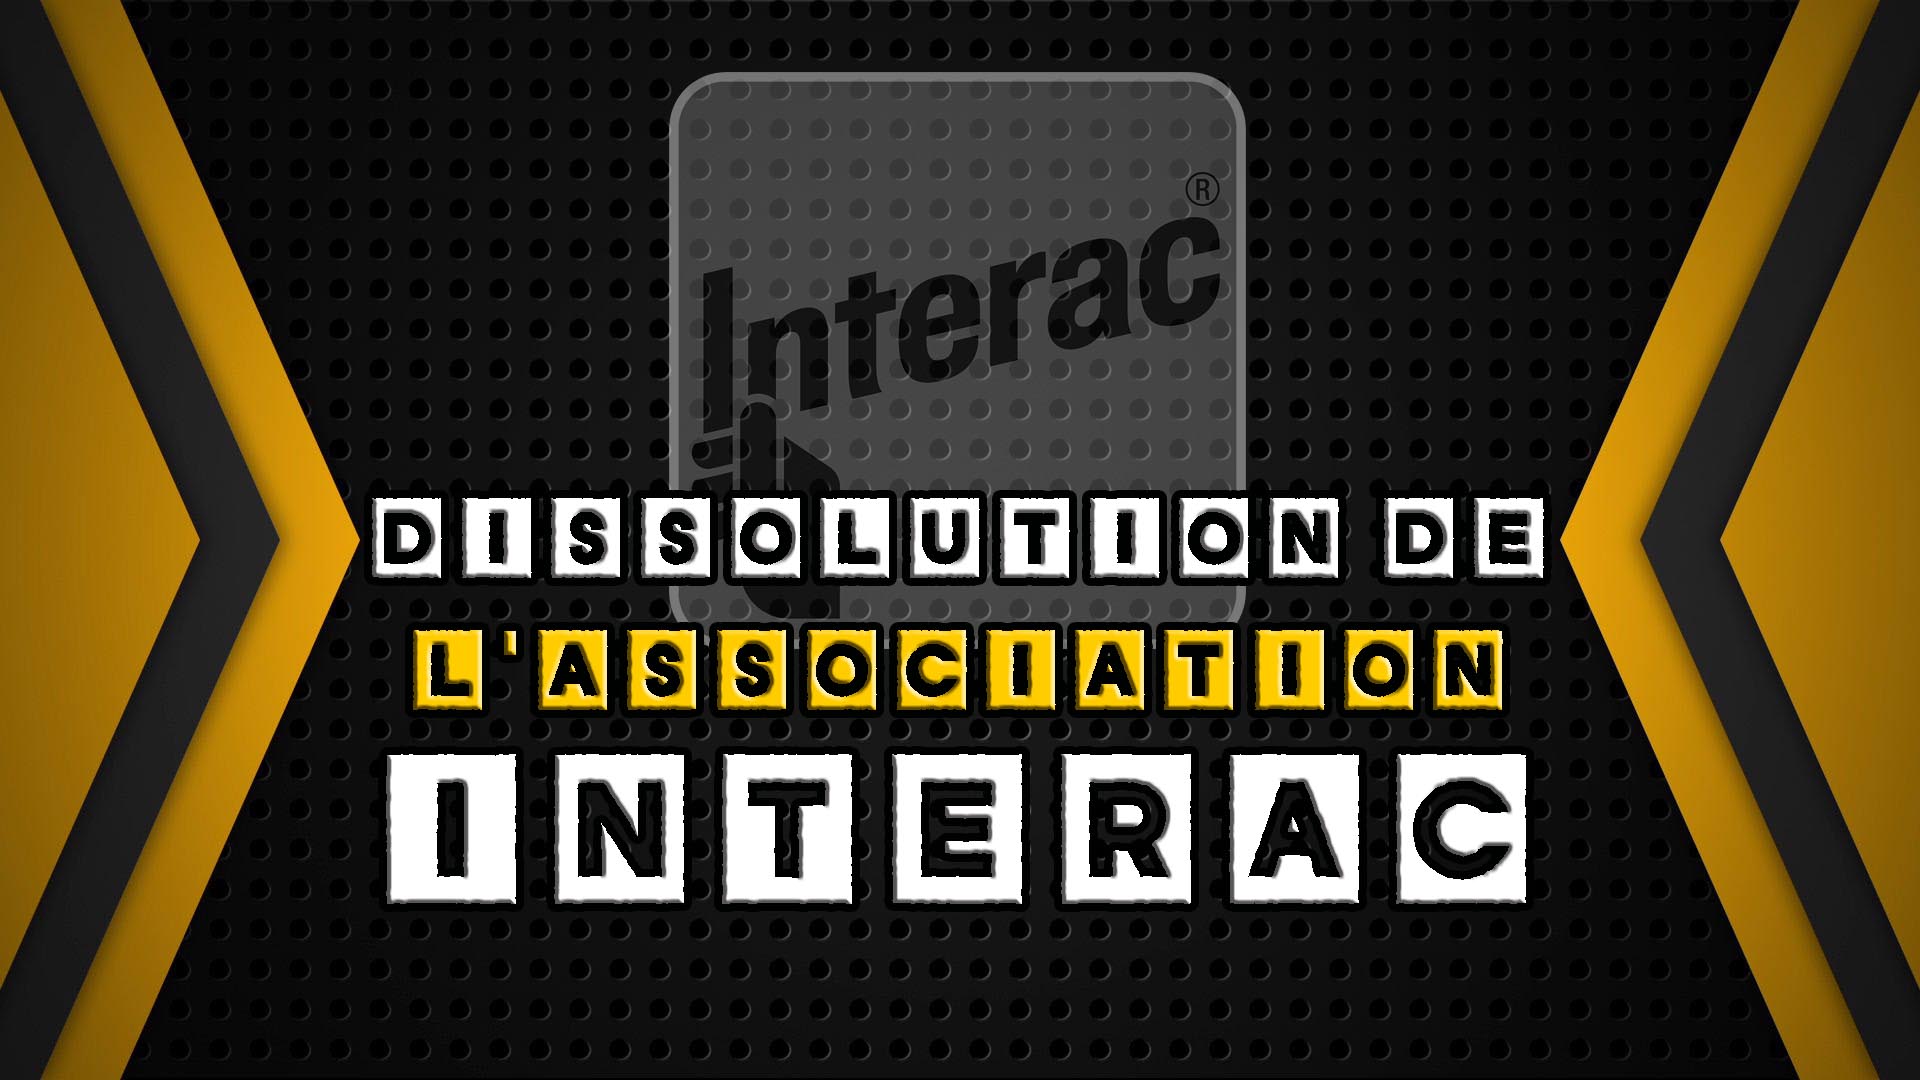 Dissolution de l'Association Interac - Fusion Interac Corp